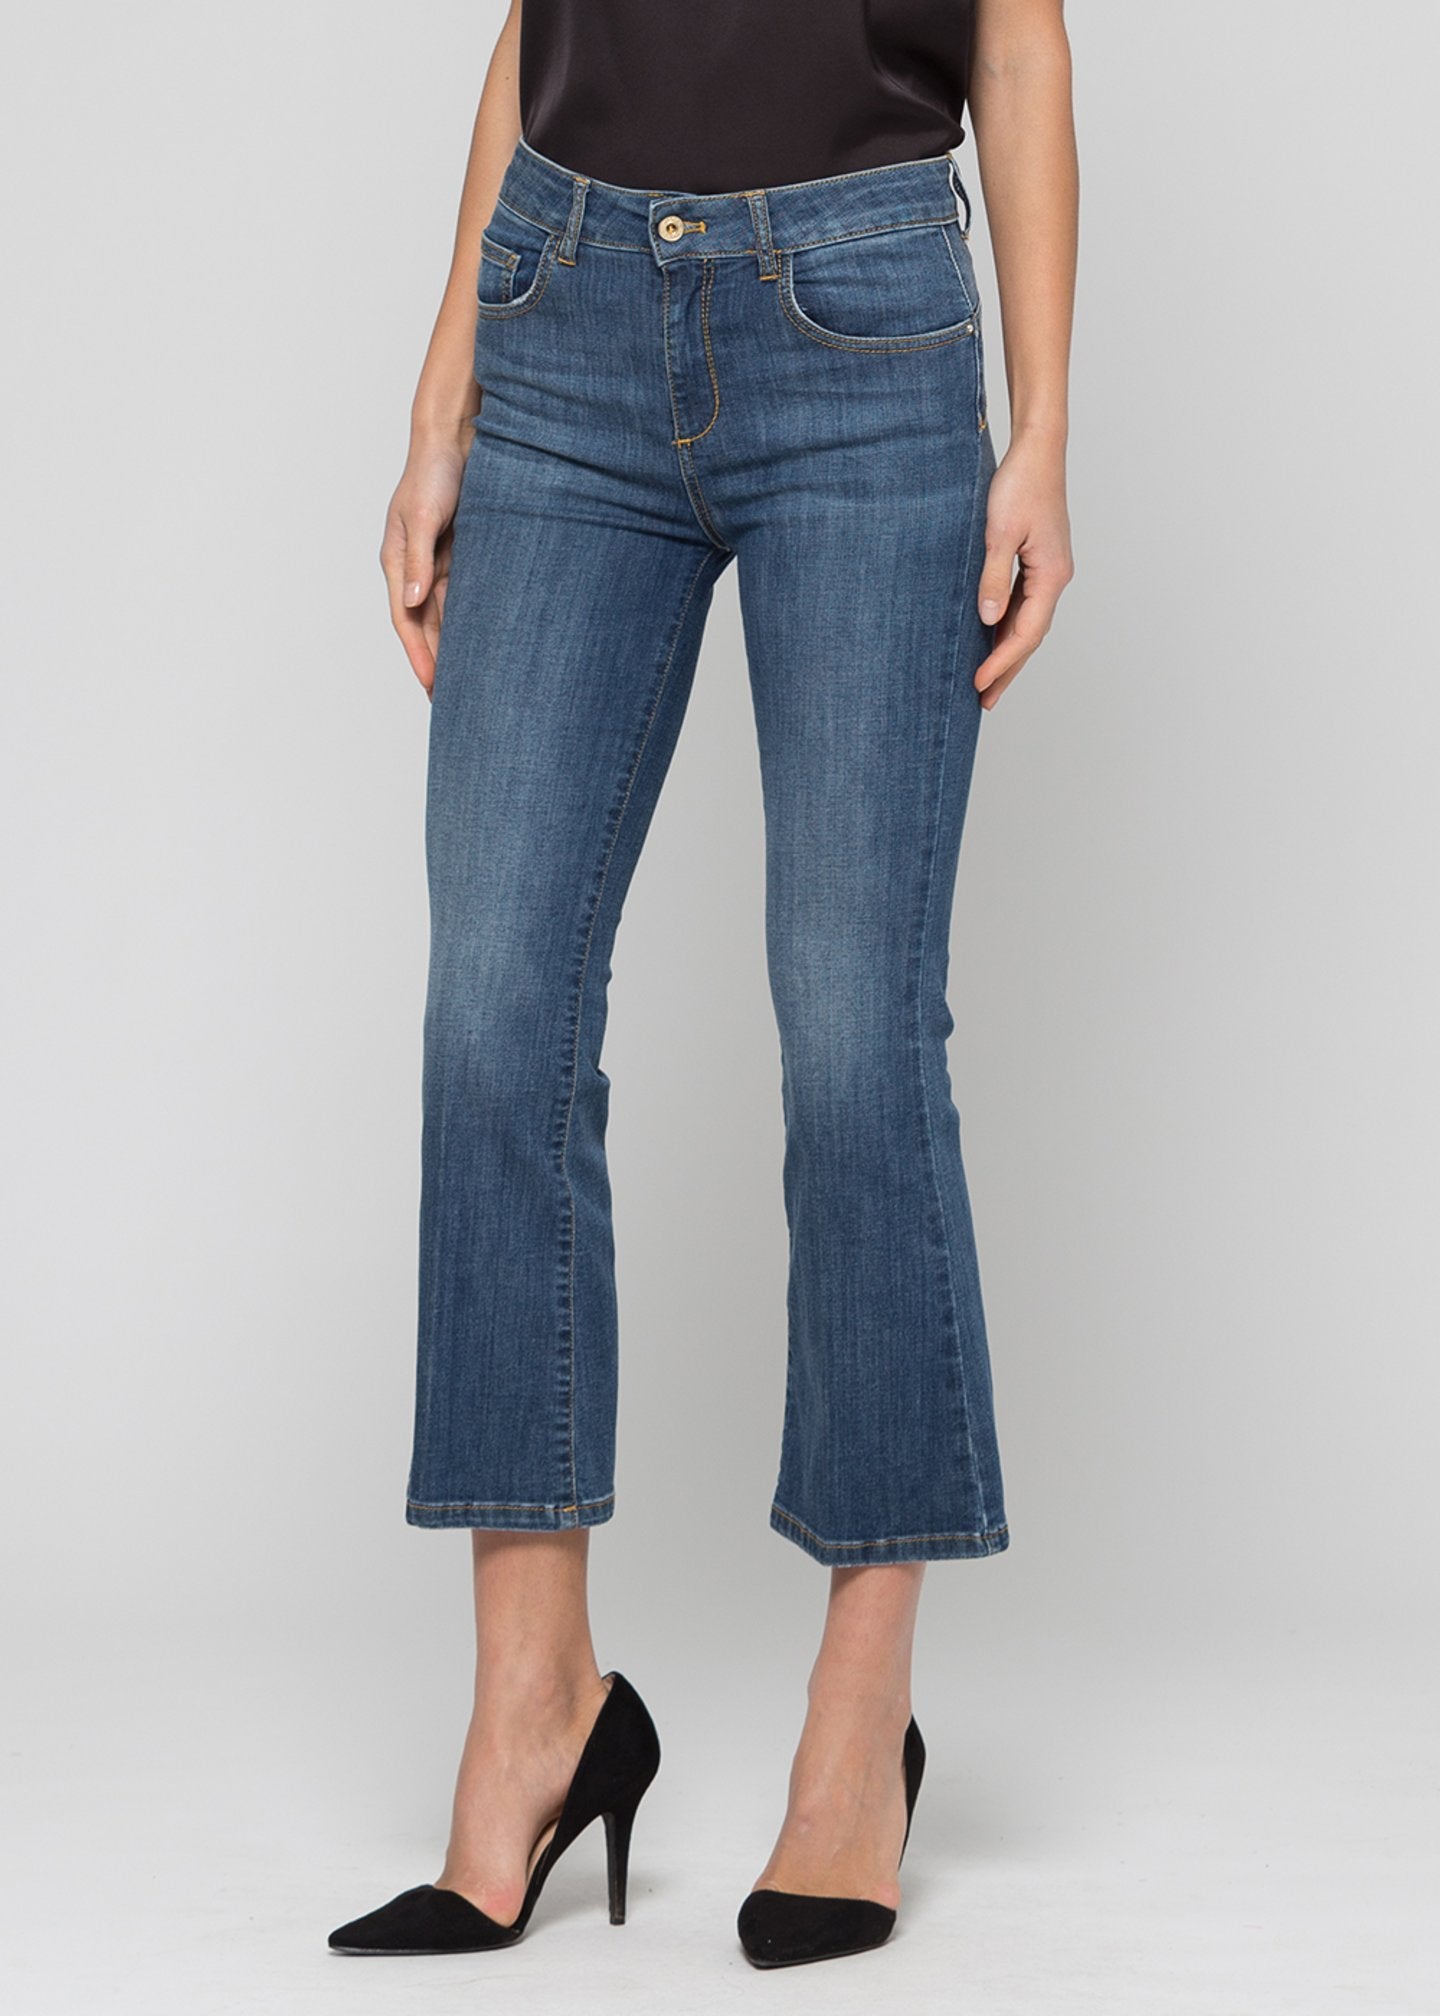 Pantalone denim flare / Jeans - Ideal Moda